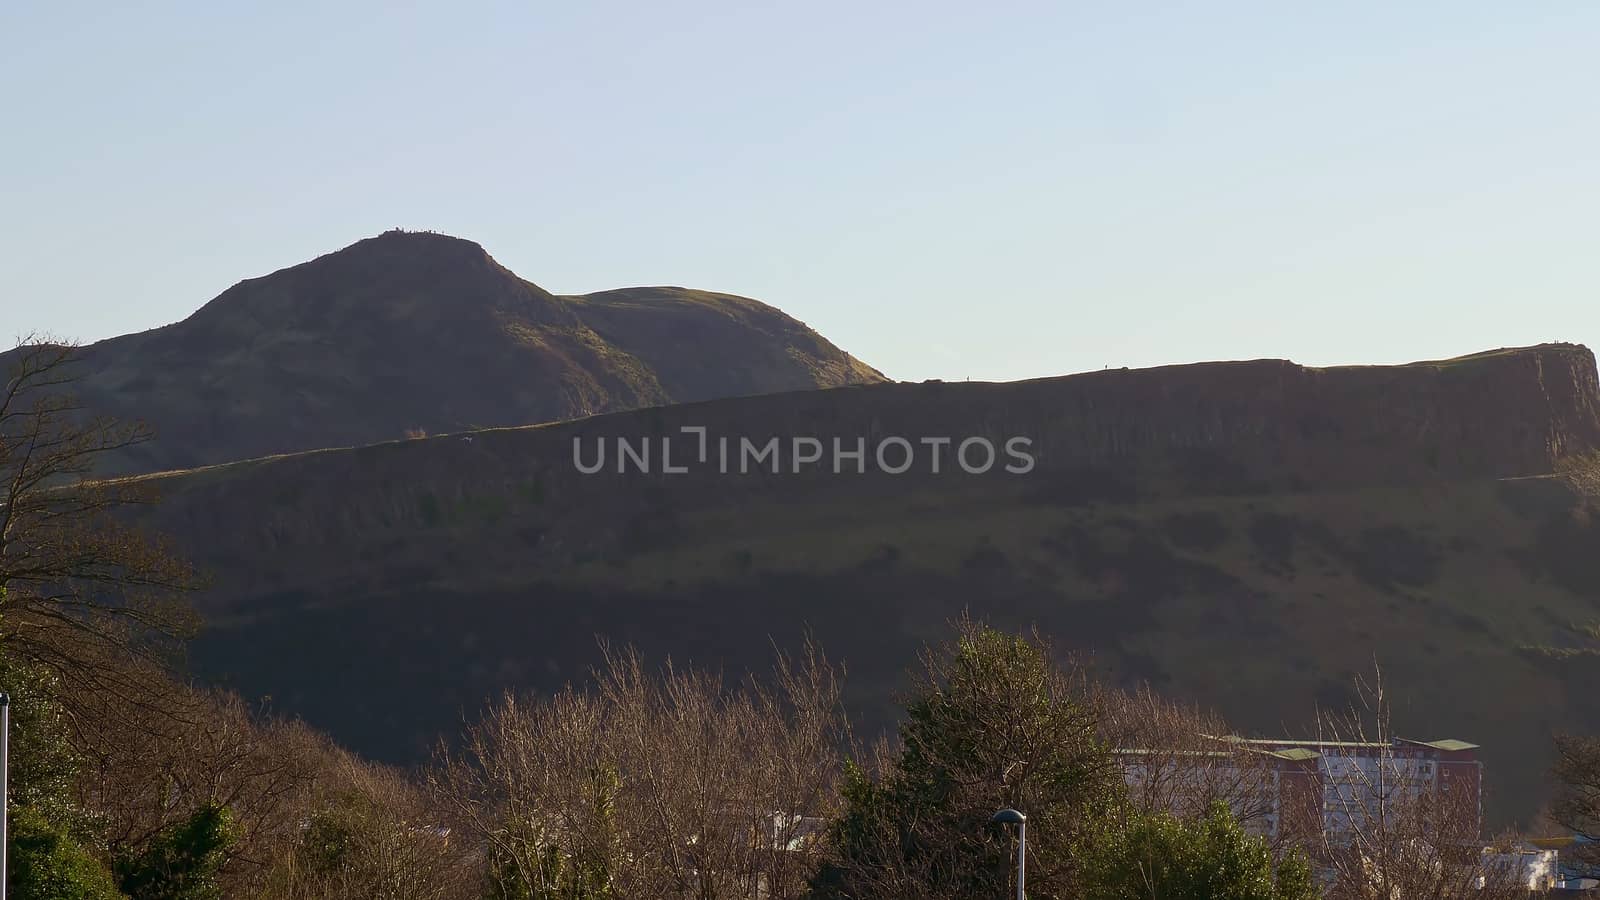 Panoramic view over Edinburgh from Calton Hill by Lattwein